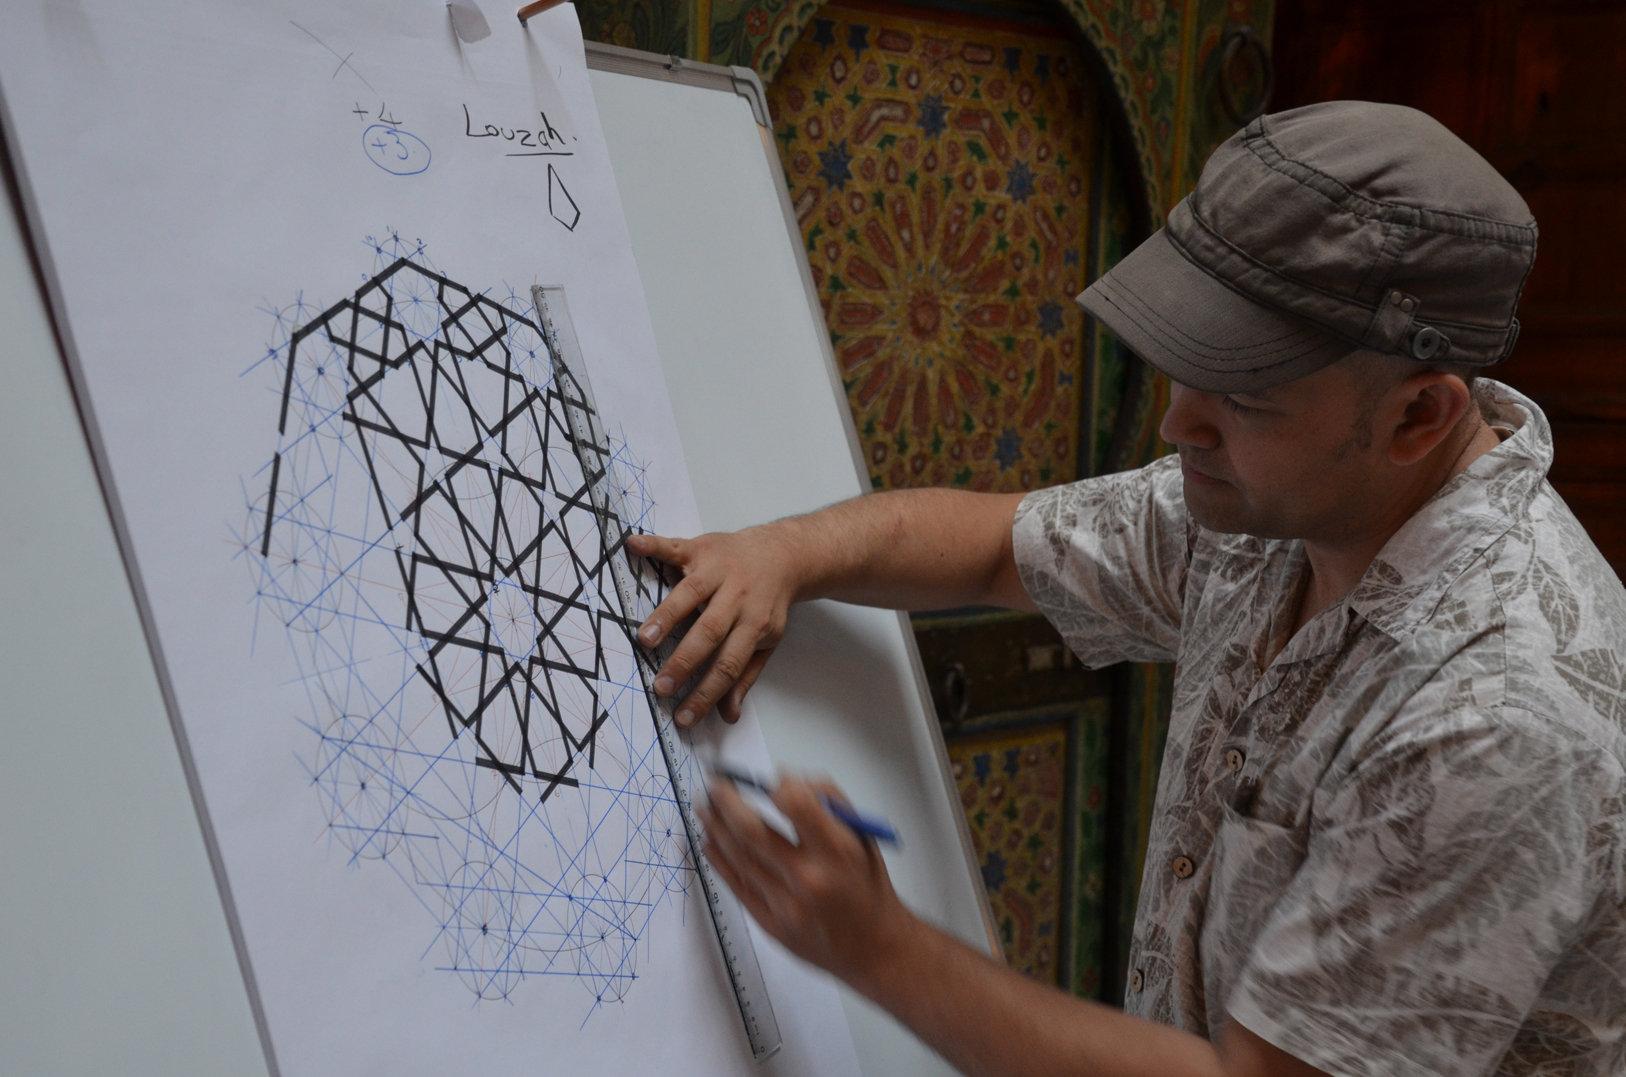  Richard teaching us one of the geometric patterns  Photo Taken by&nbsp; the Art of Islamic Pattern&nbsp;  